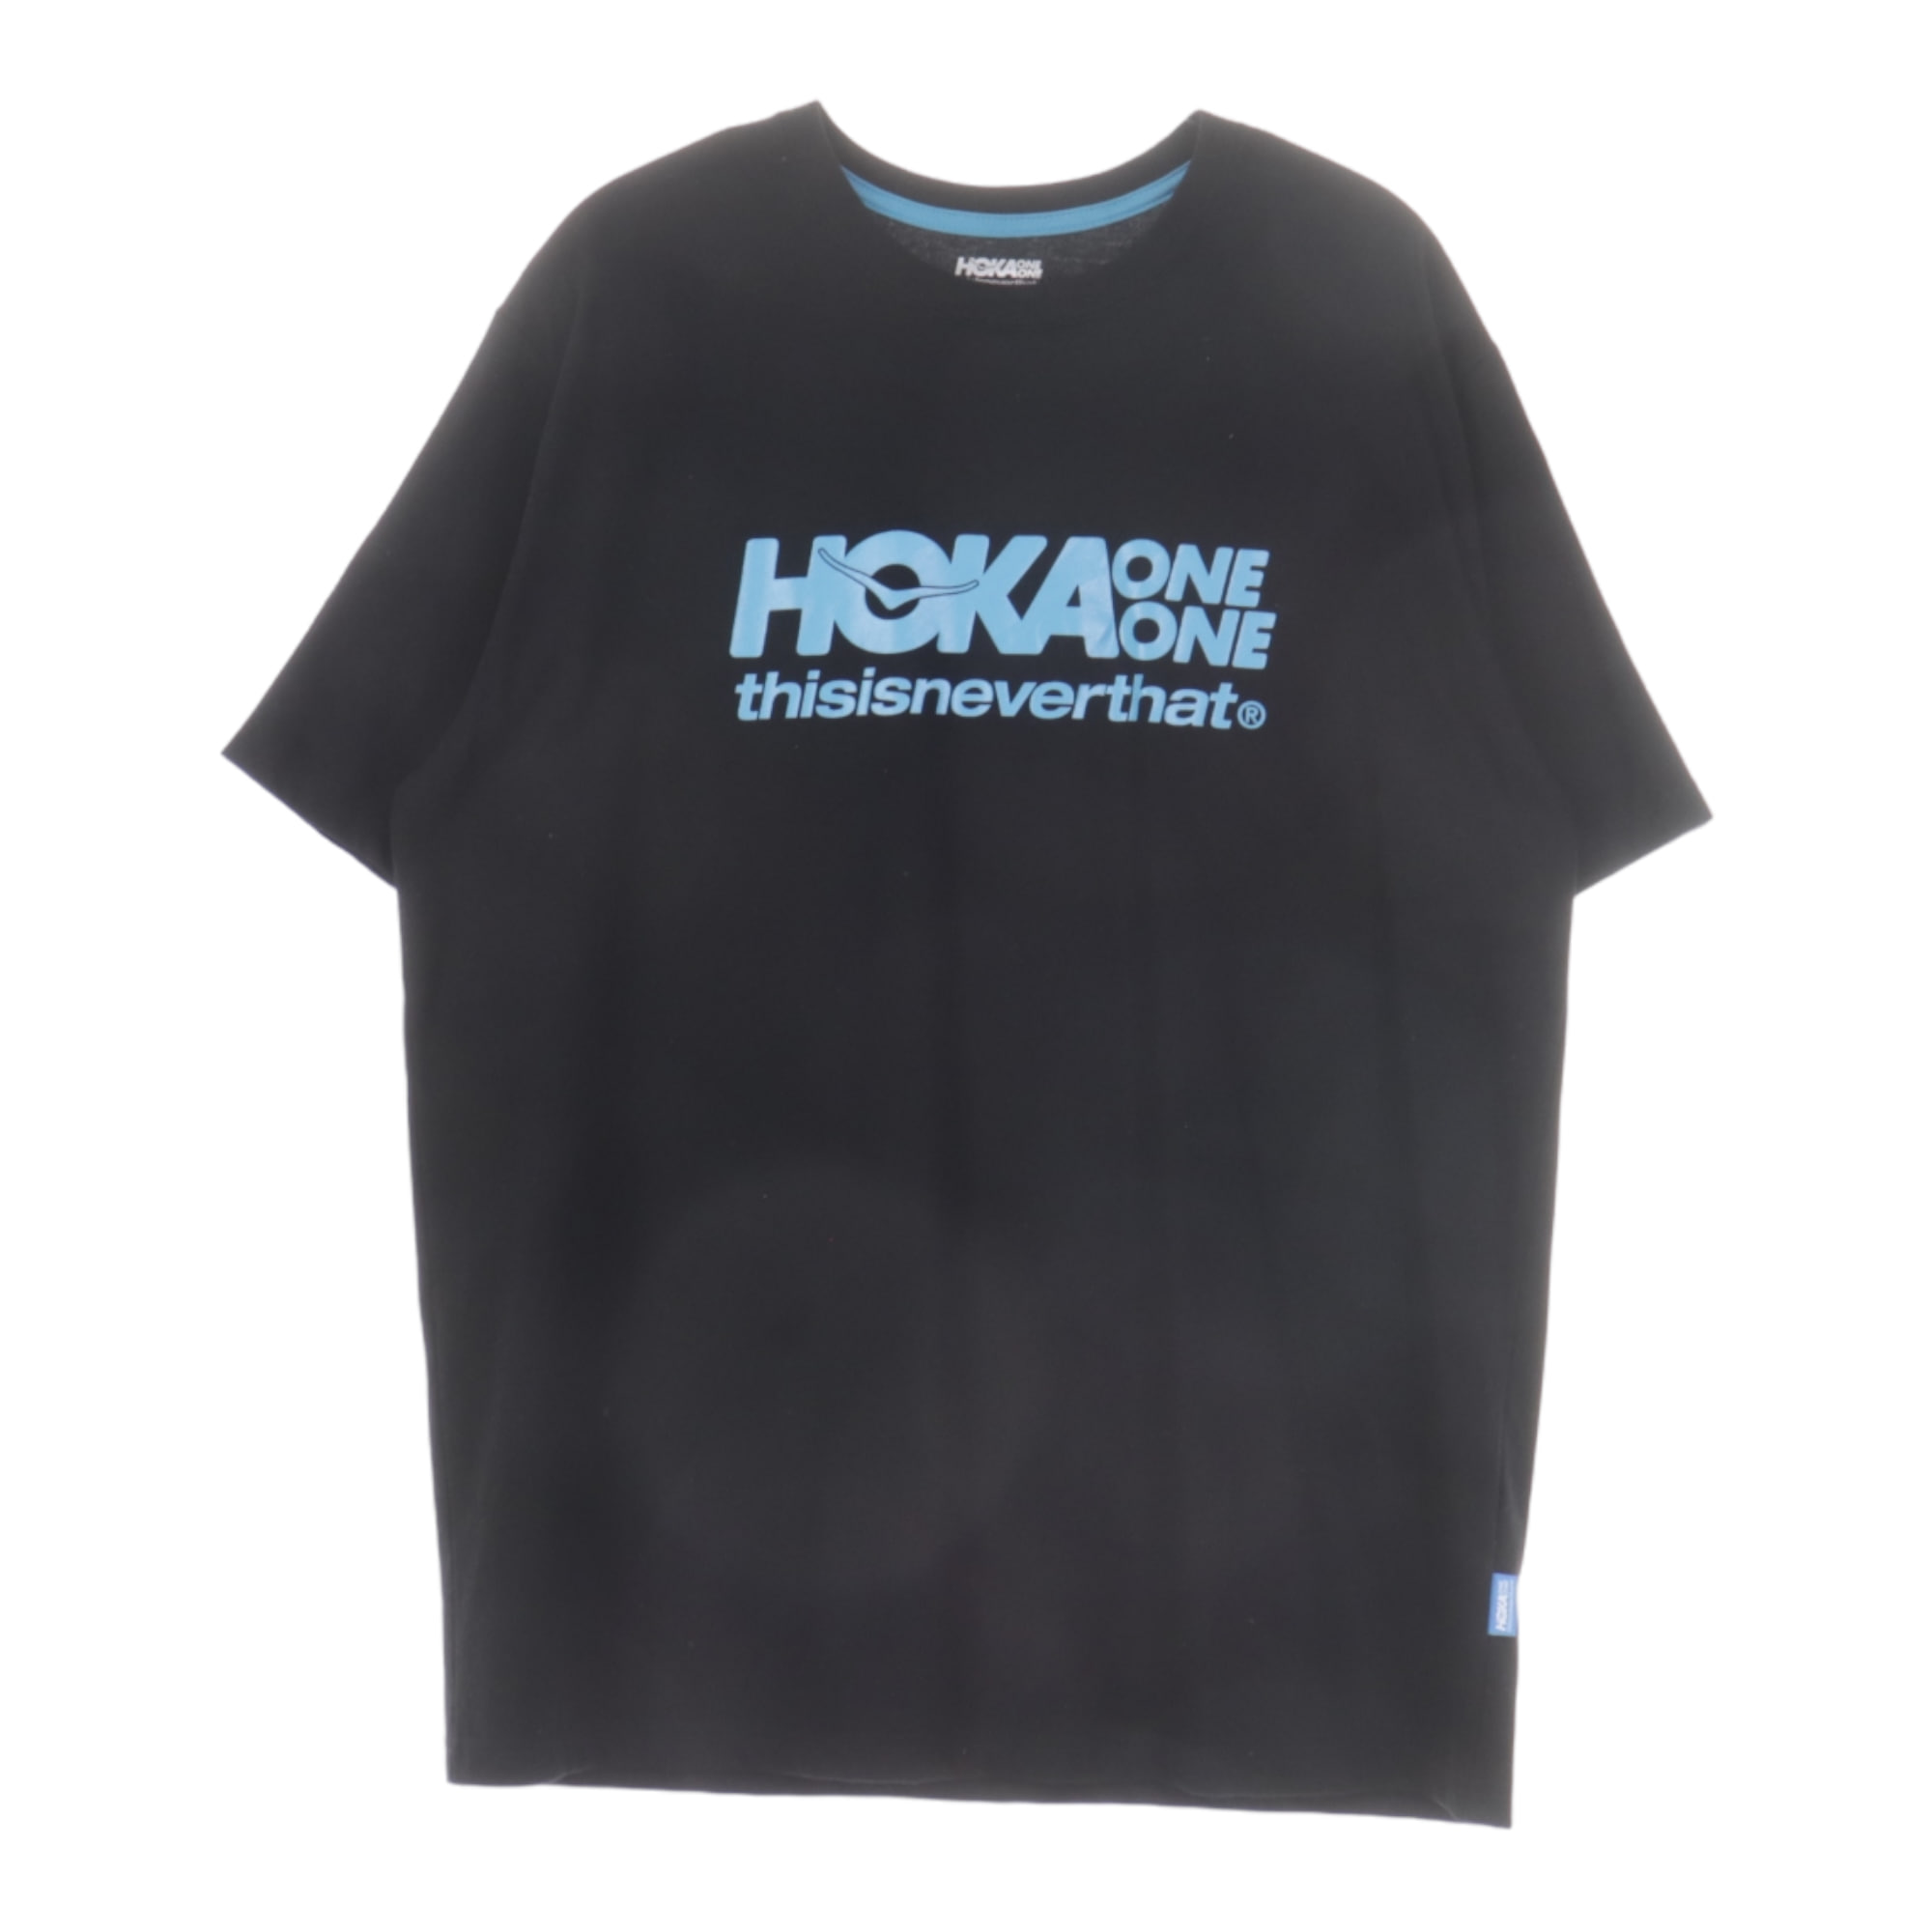 Hokaone One,T-Shirts